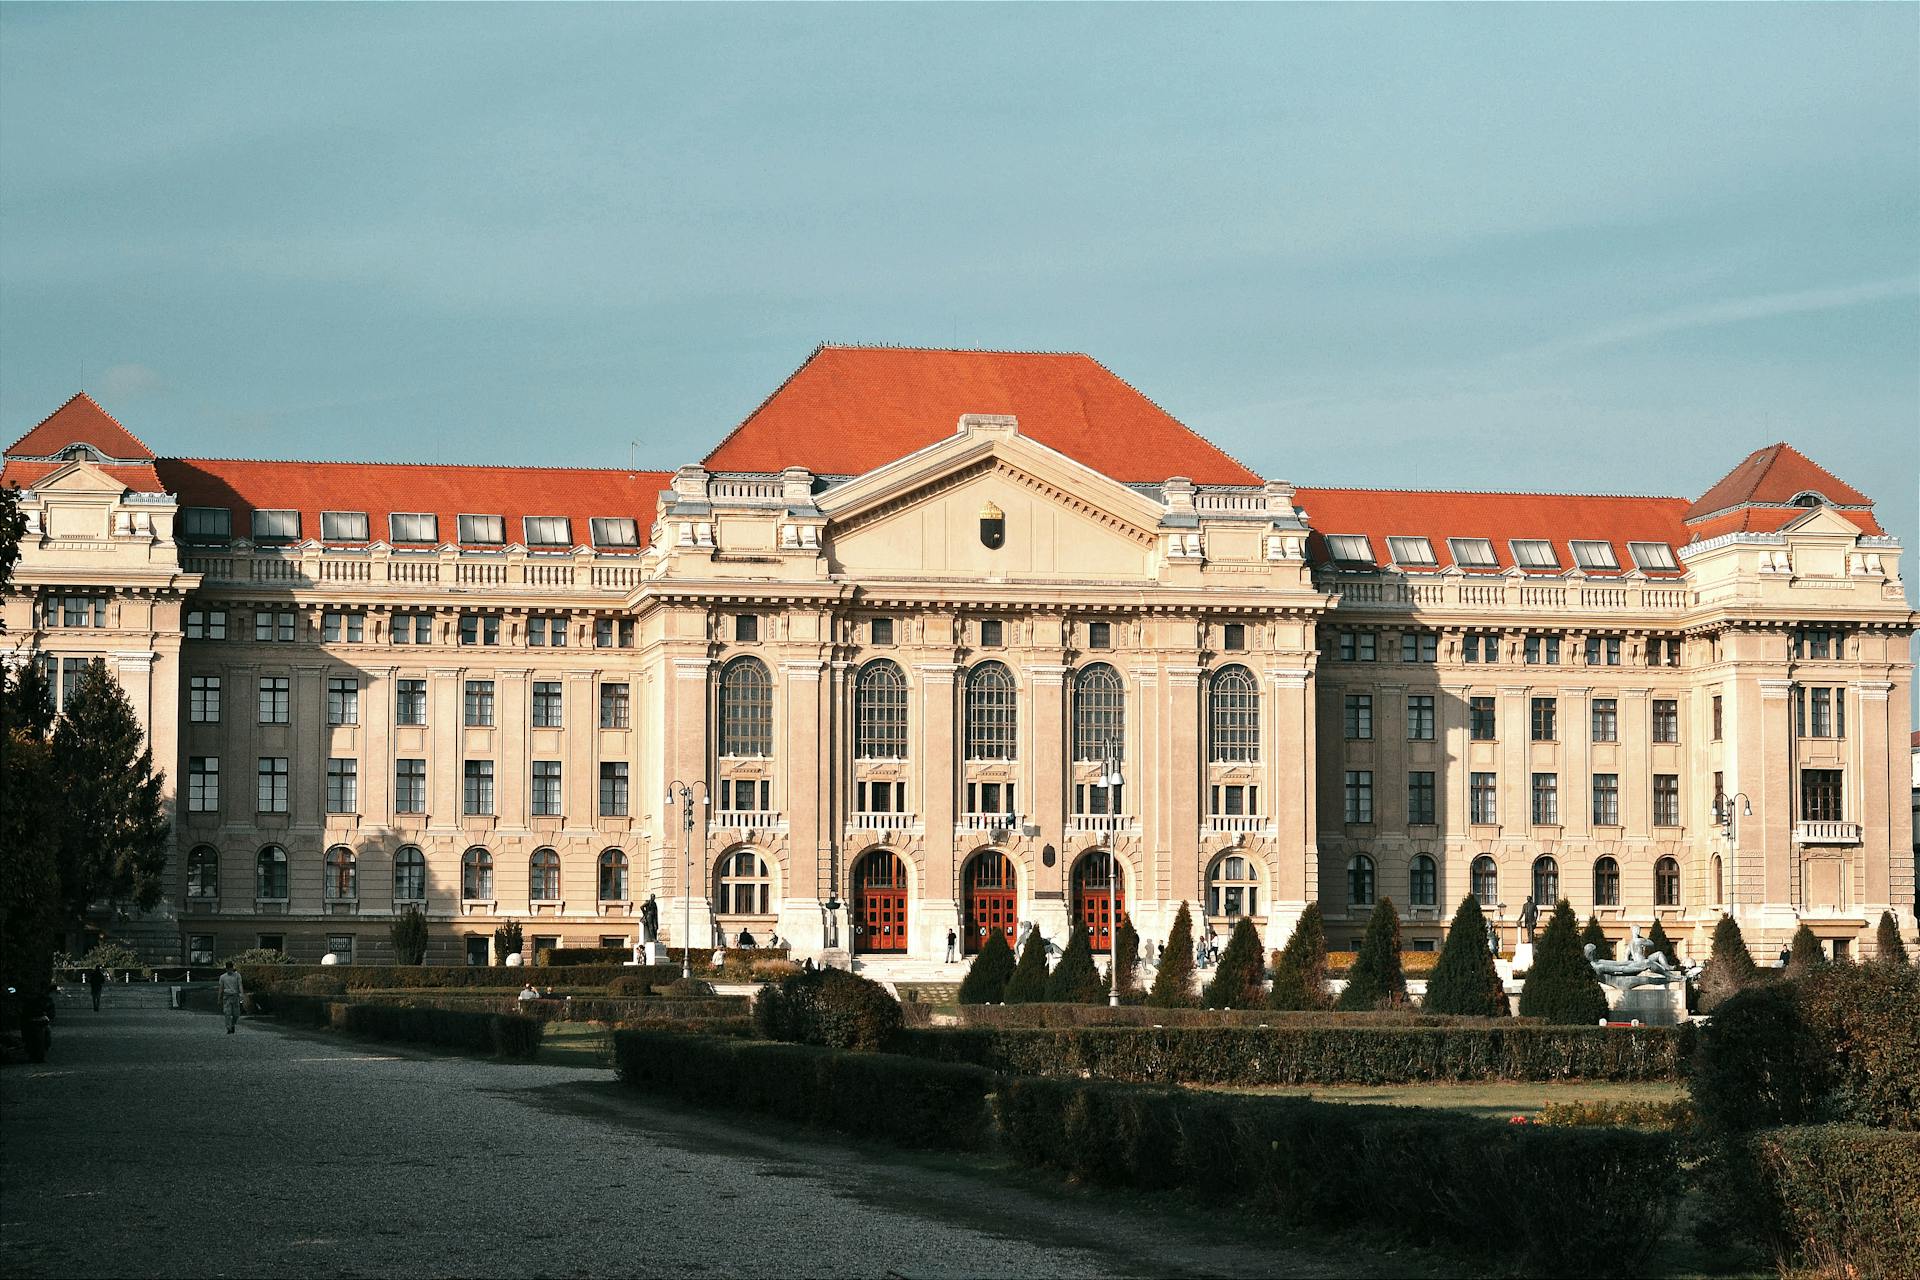 University of Debrecen in Hungary